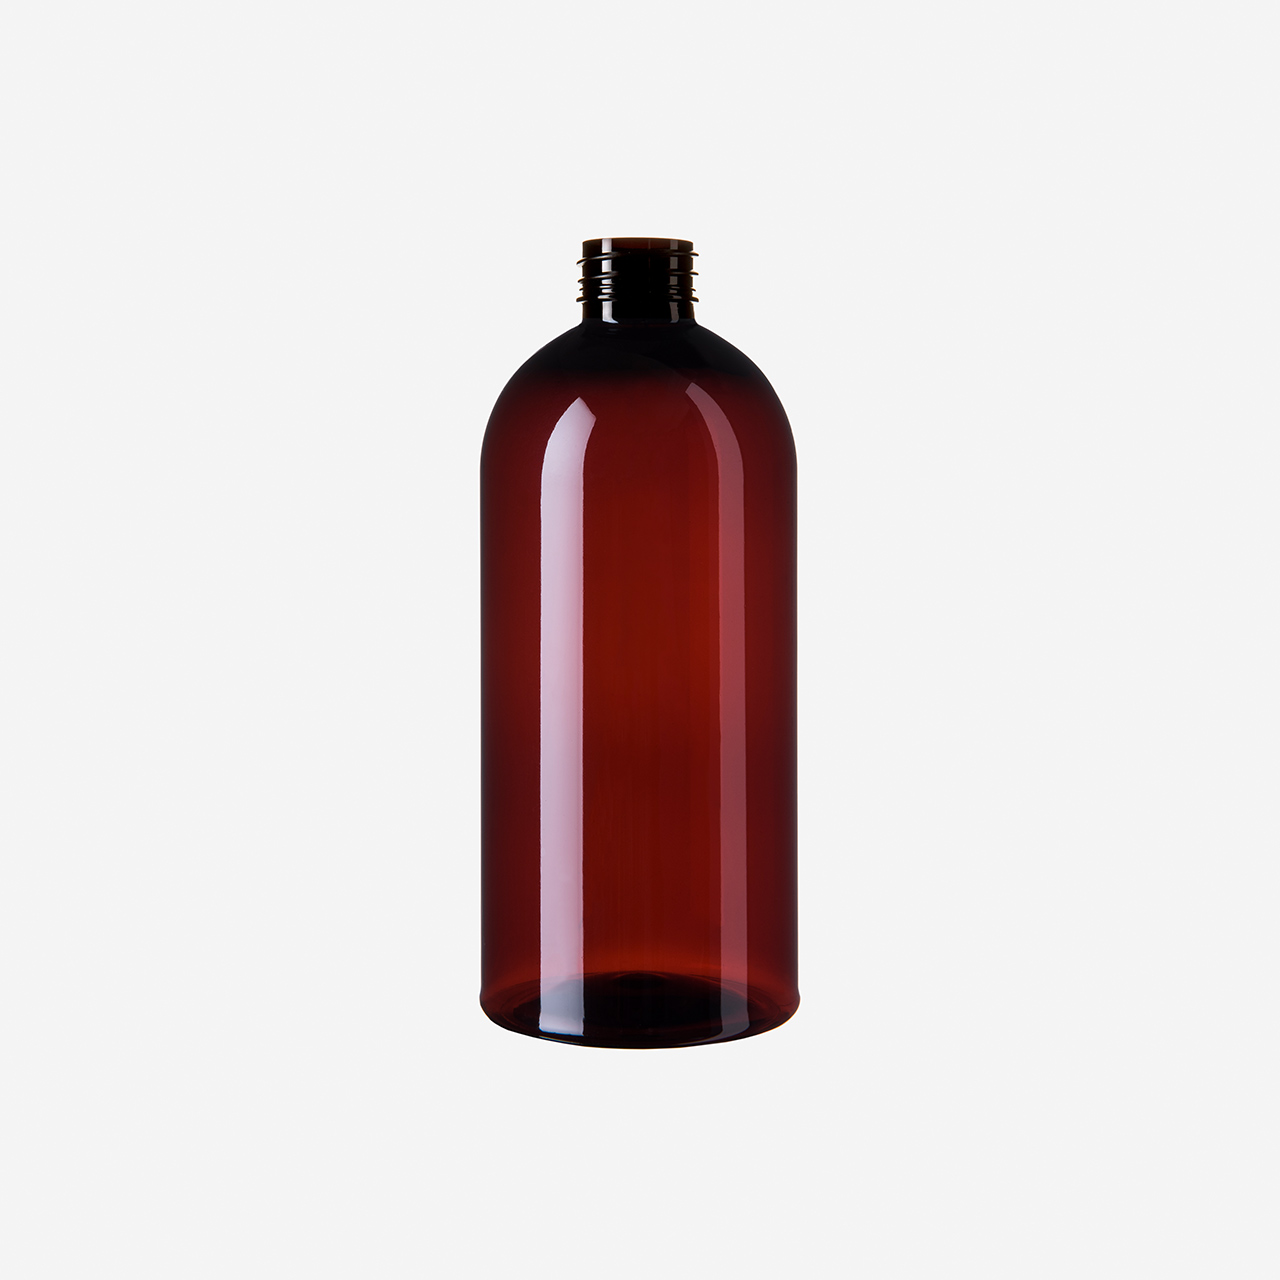 Recycling Rundflasche, braun-transparent, 500 ml 